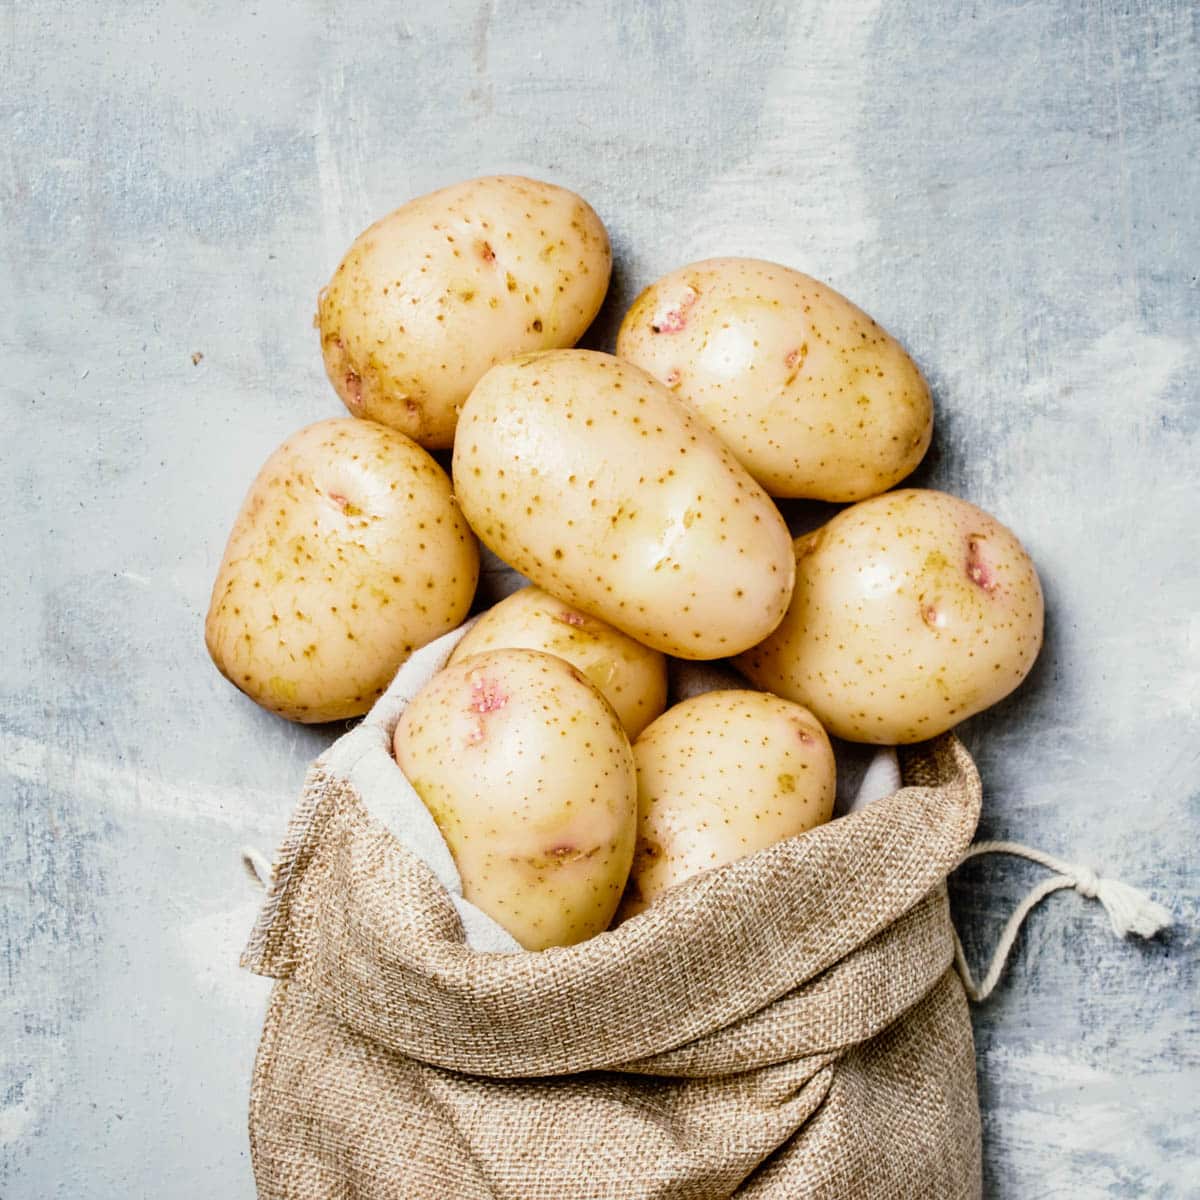 How To Store White Potatoes